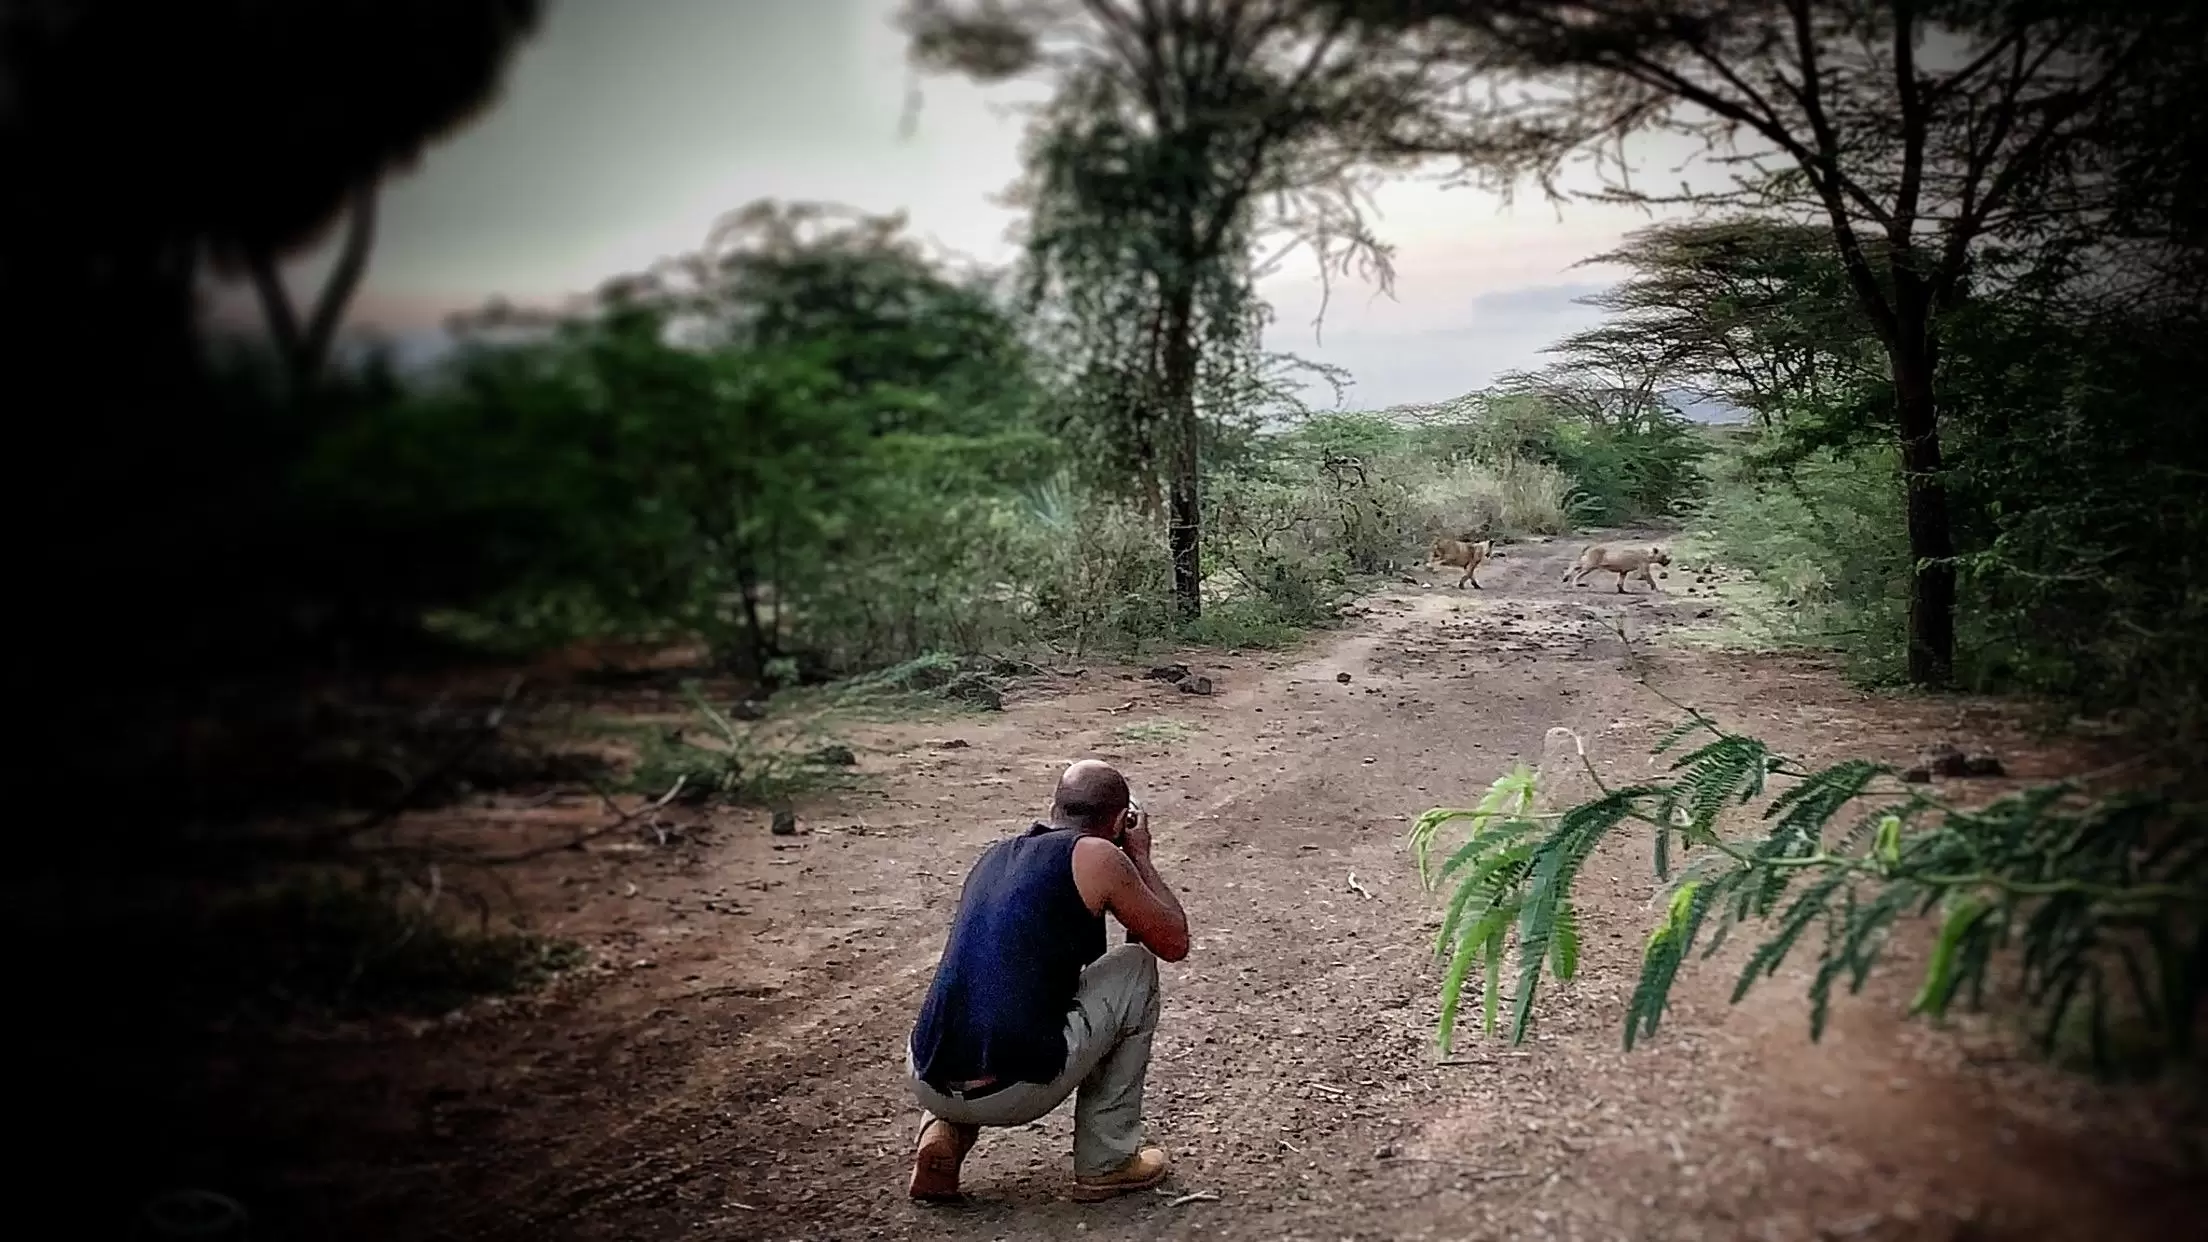 Aziz capturing photos of 2 lions walking across the dirt road